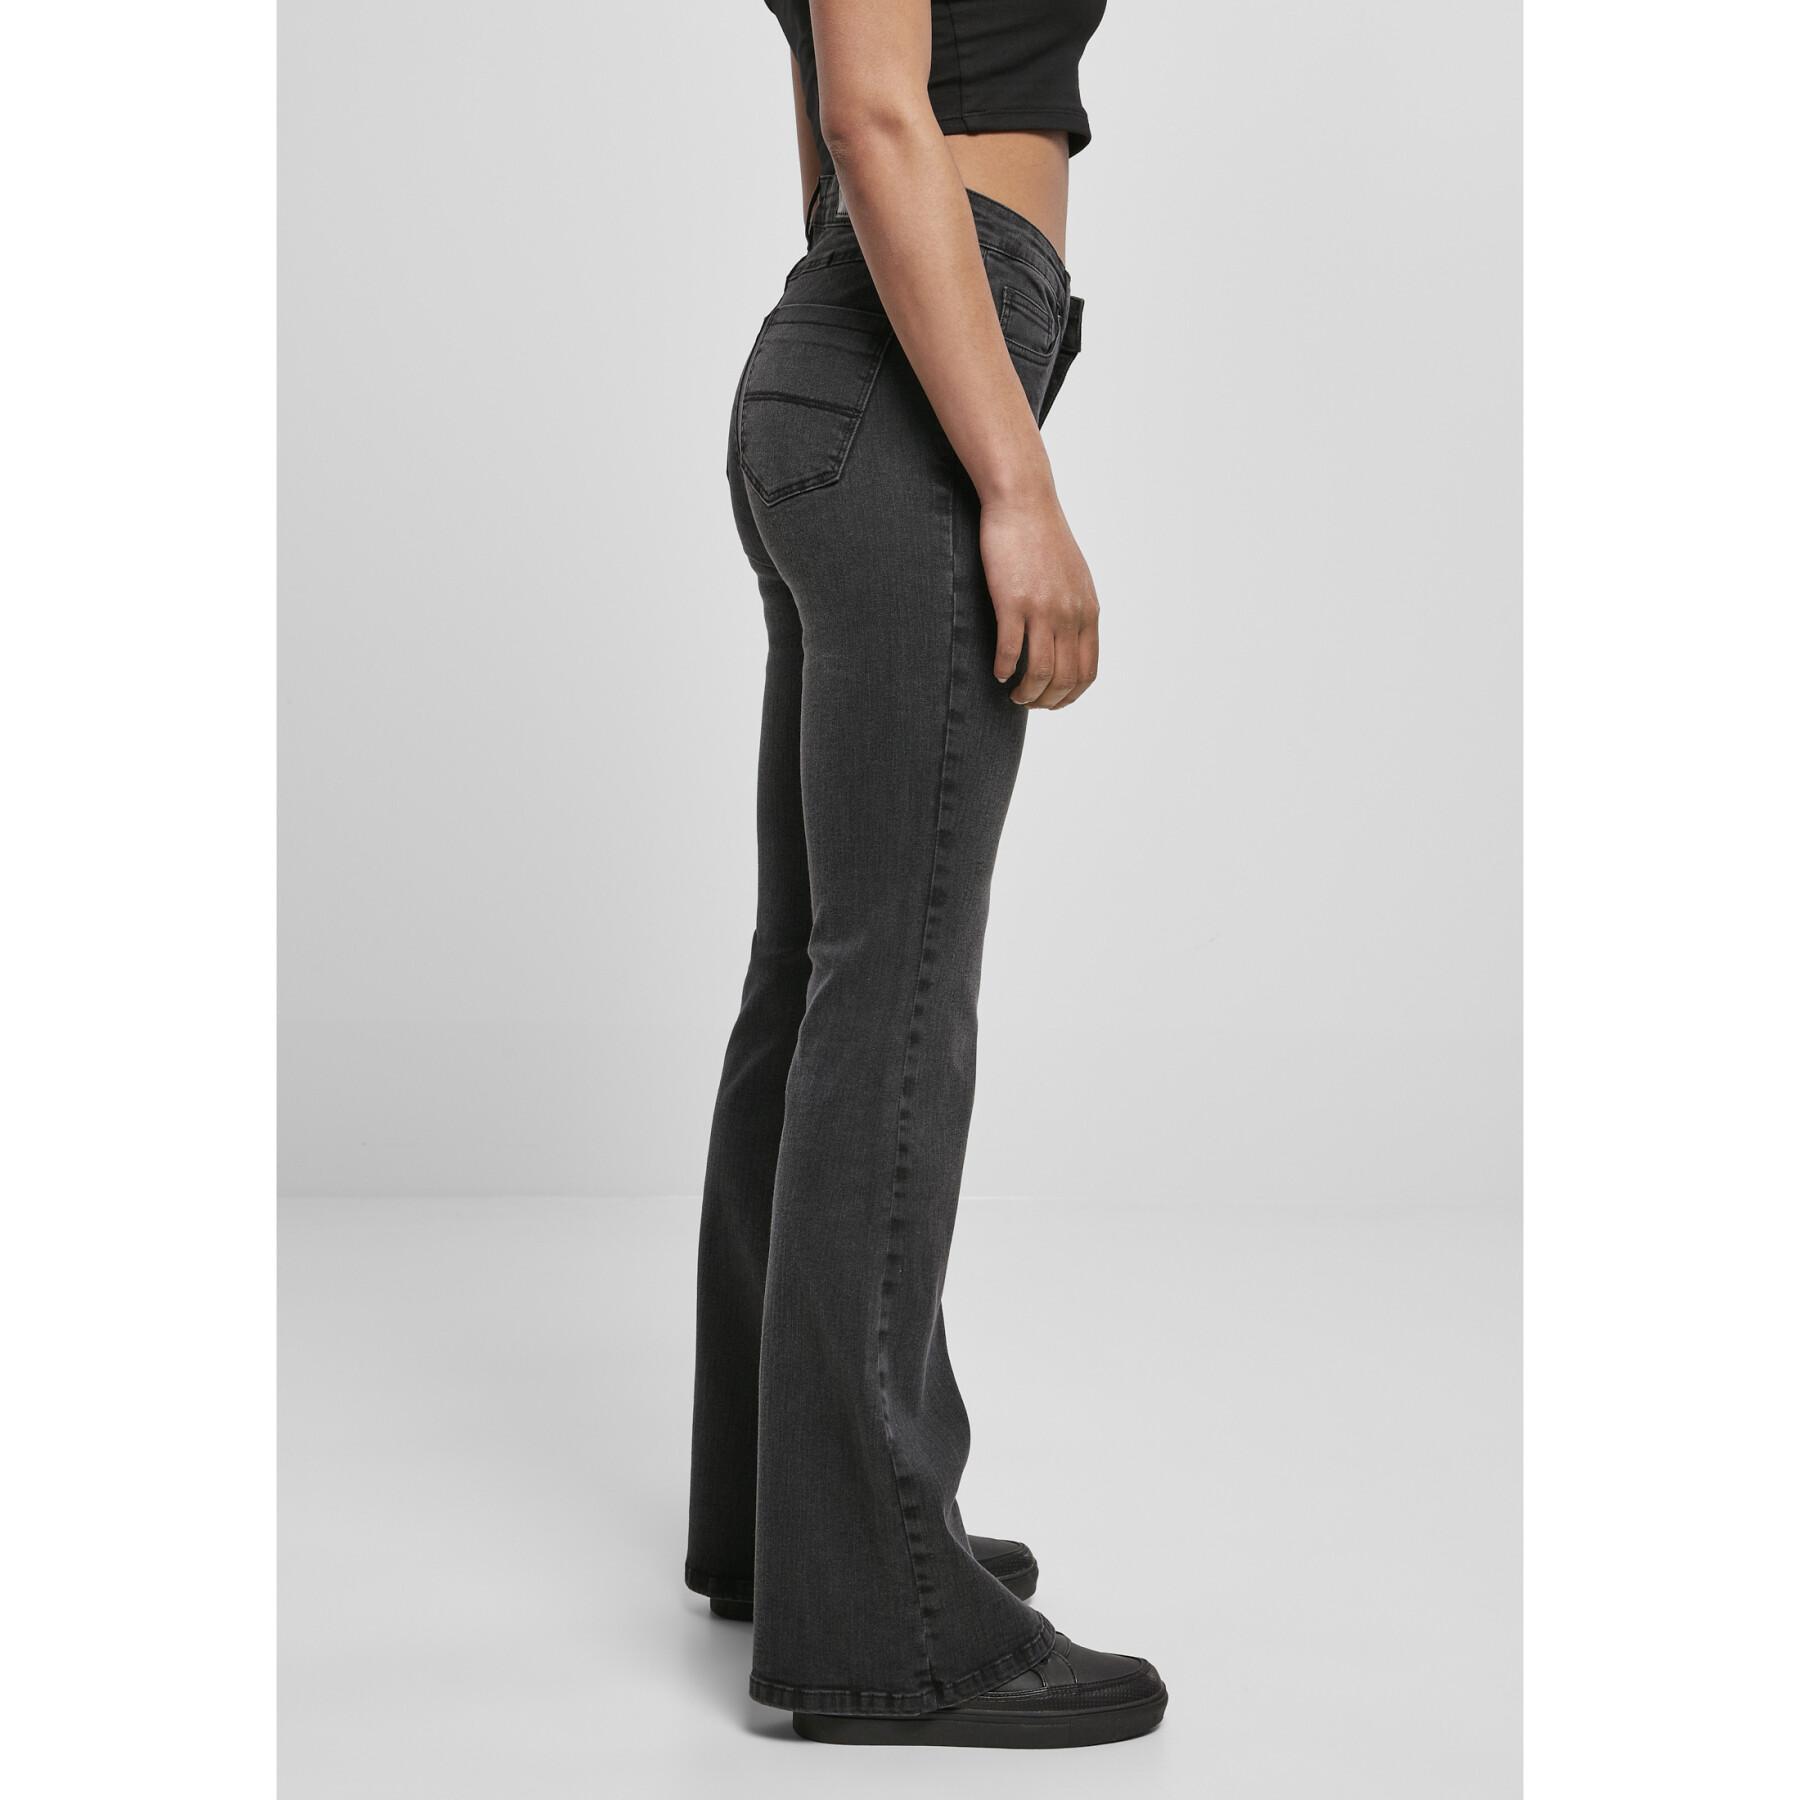 Pantalones vaqueros de mujer Urban Classics high waist flared